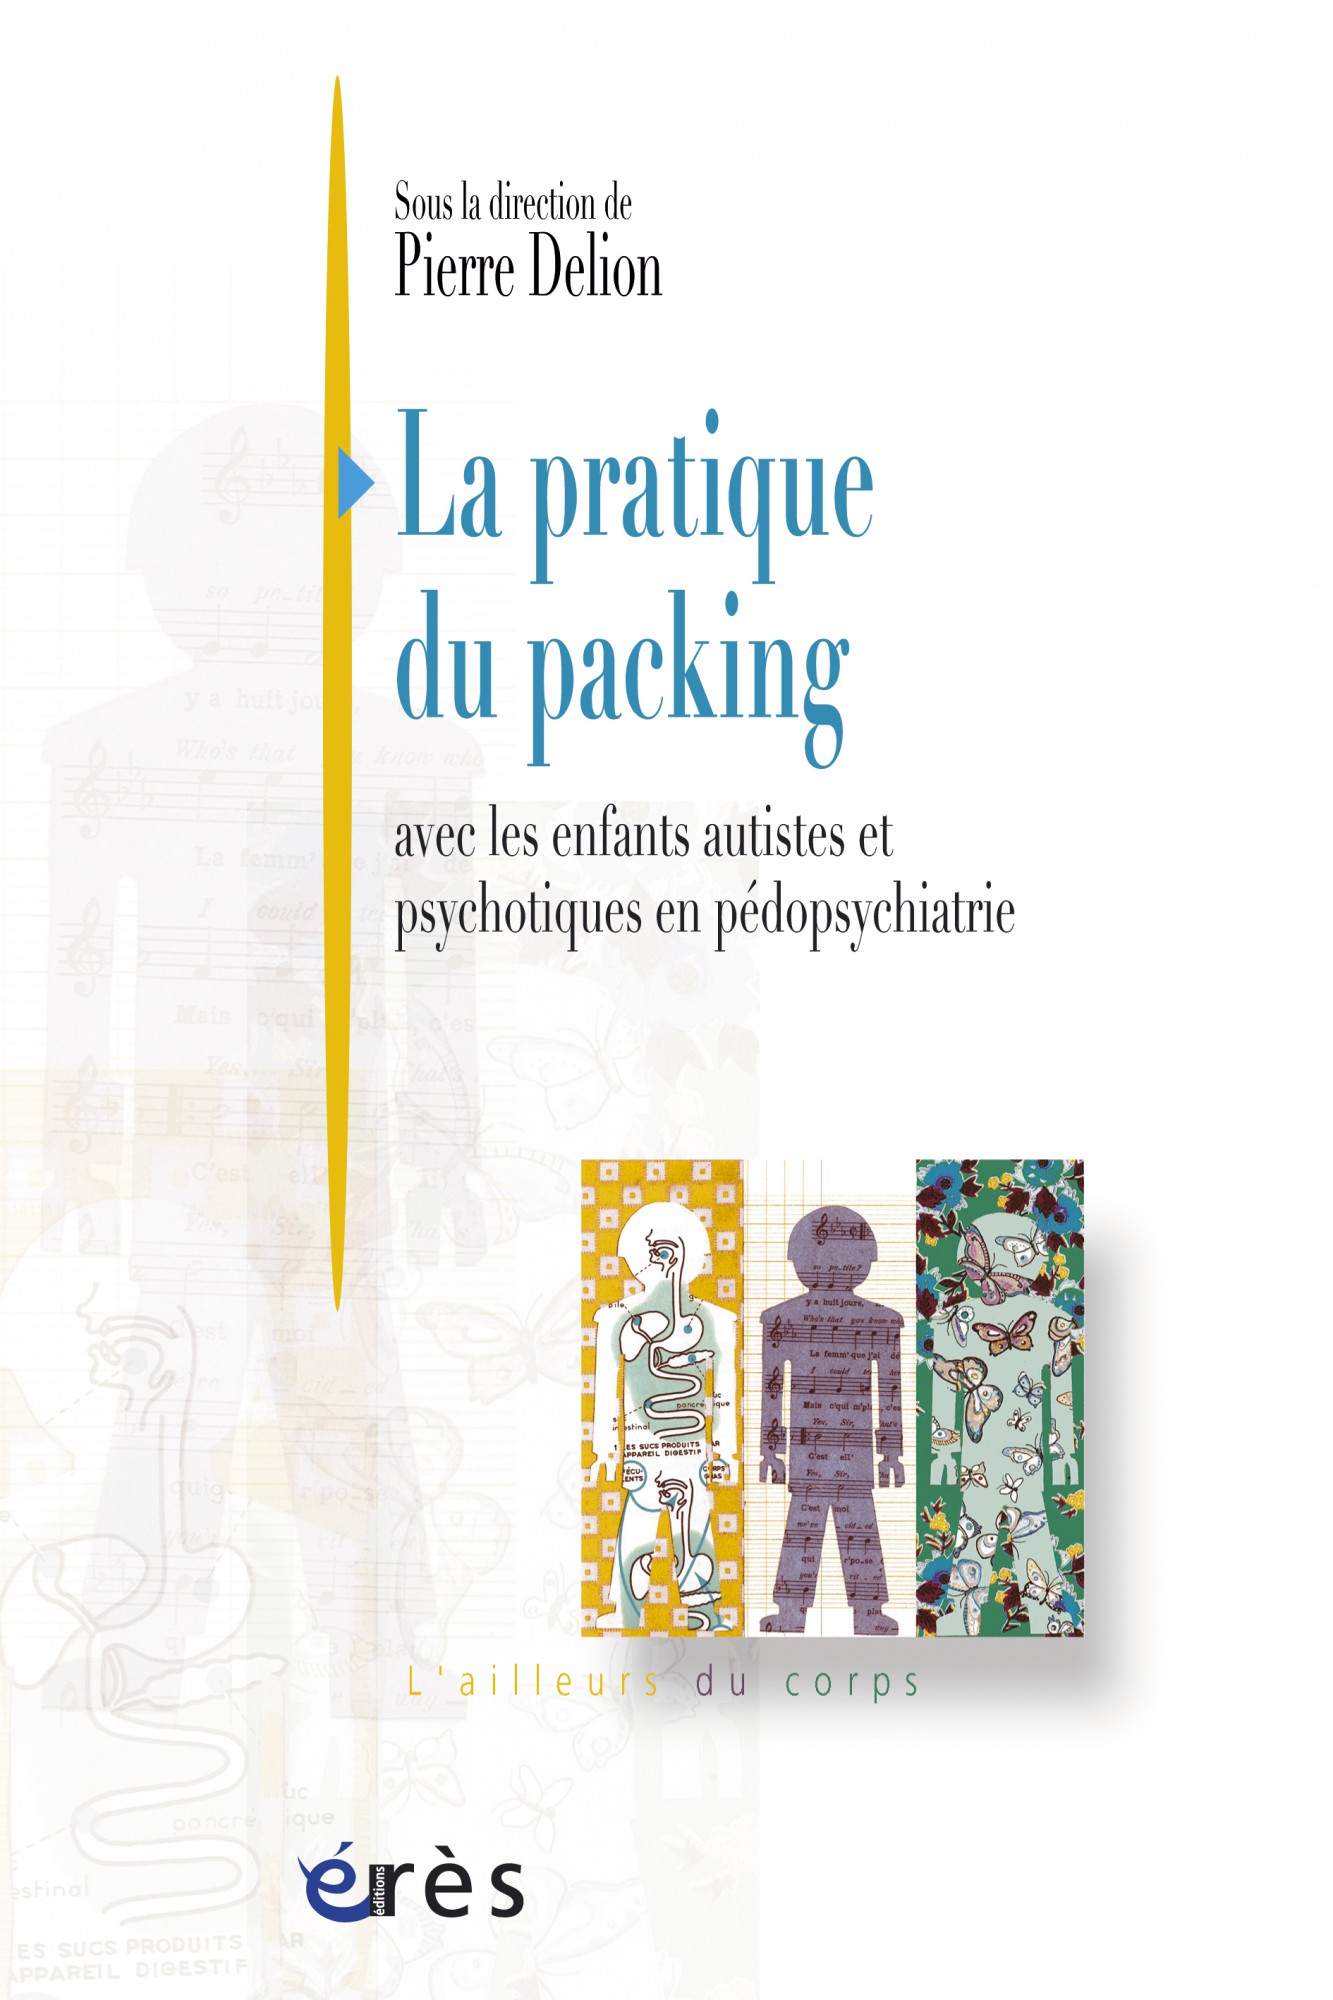 Pierre Delion Packing